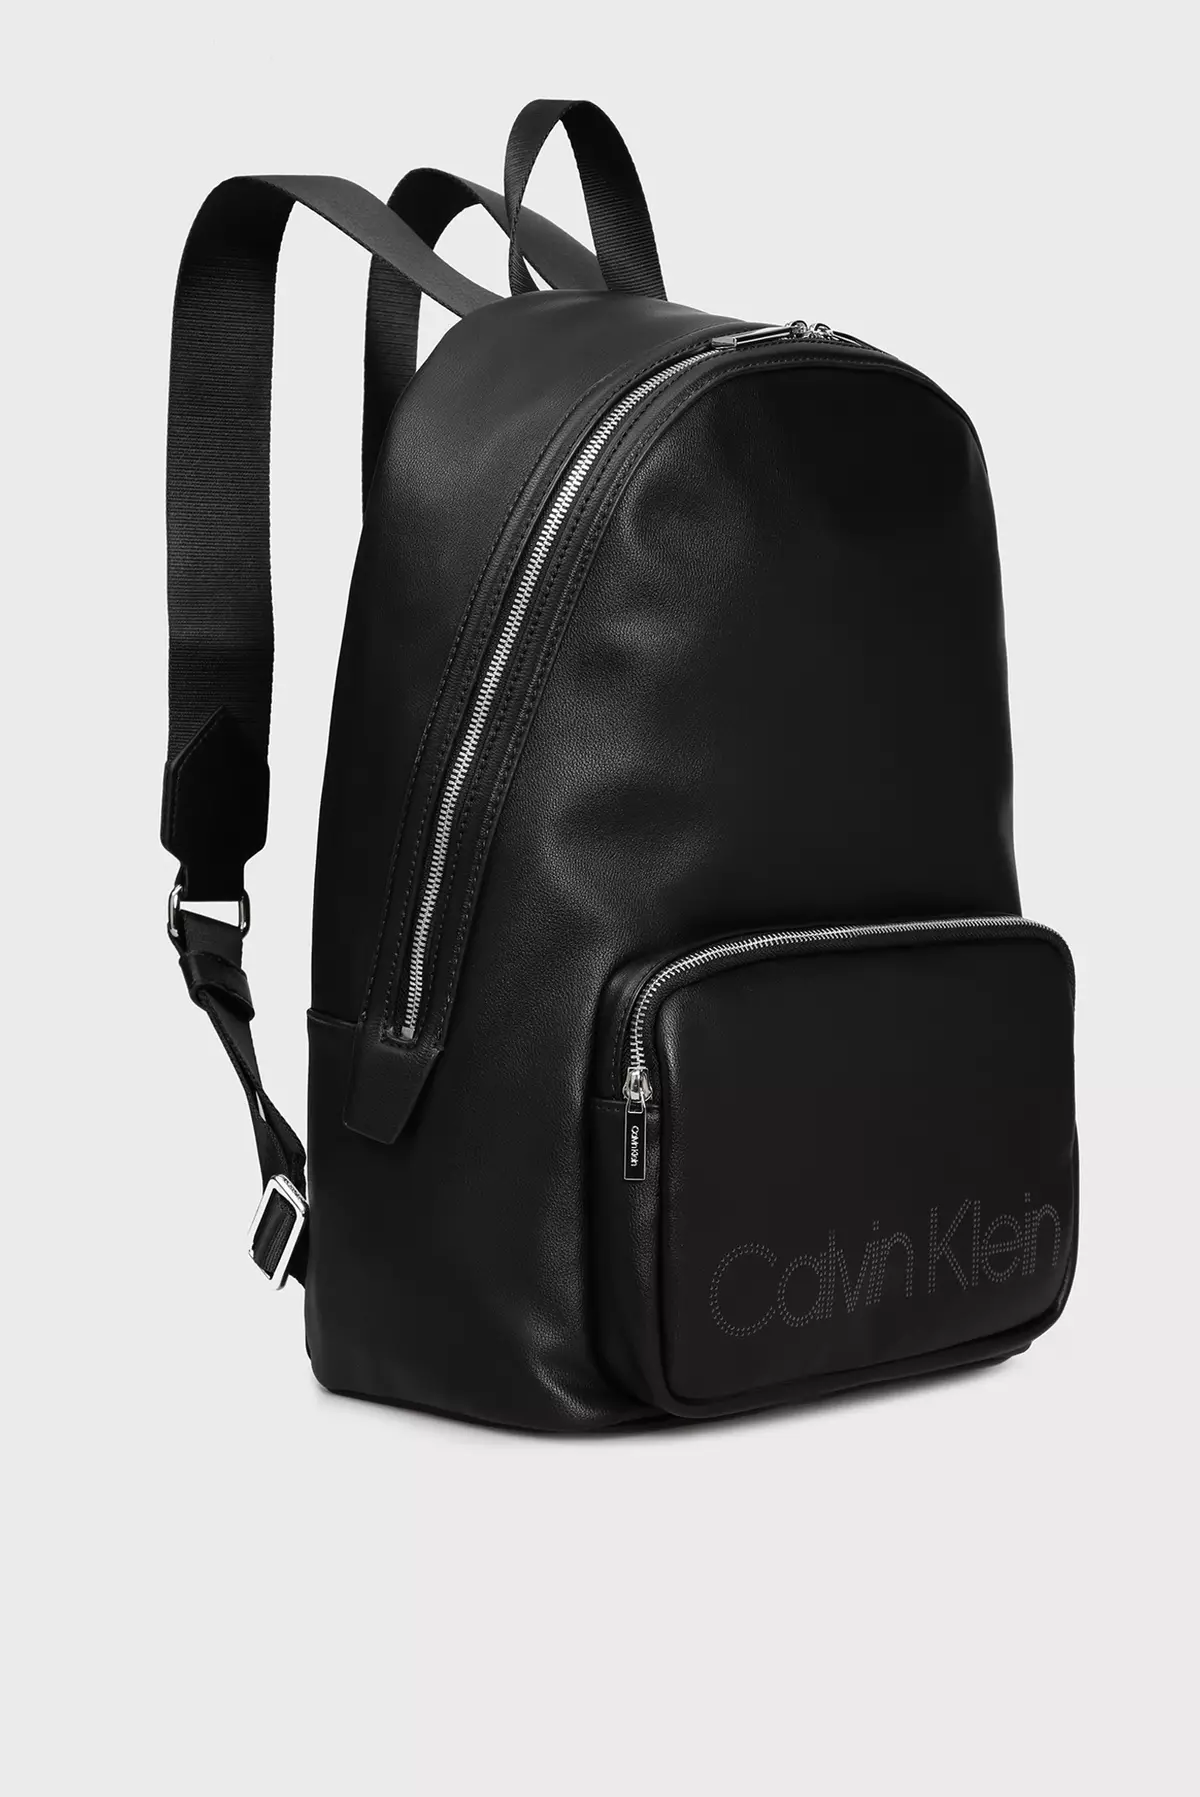 Calvin Klein Backpacks: Black Kike na Mwanaume, Leather Red, White, Yellow Kwa Monogramm na Rangi nyingine Mifuko - Backpacks 15401_7